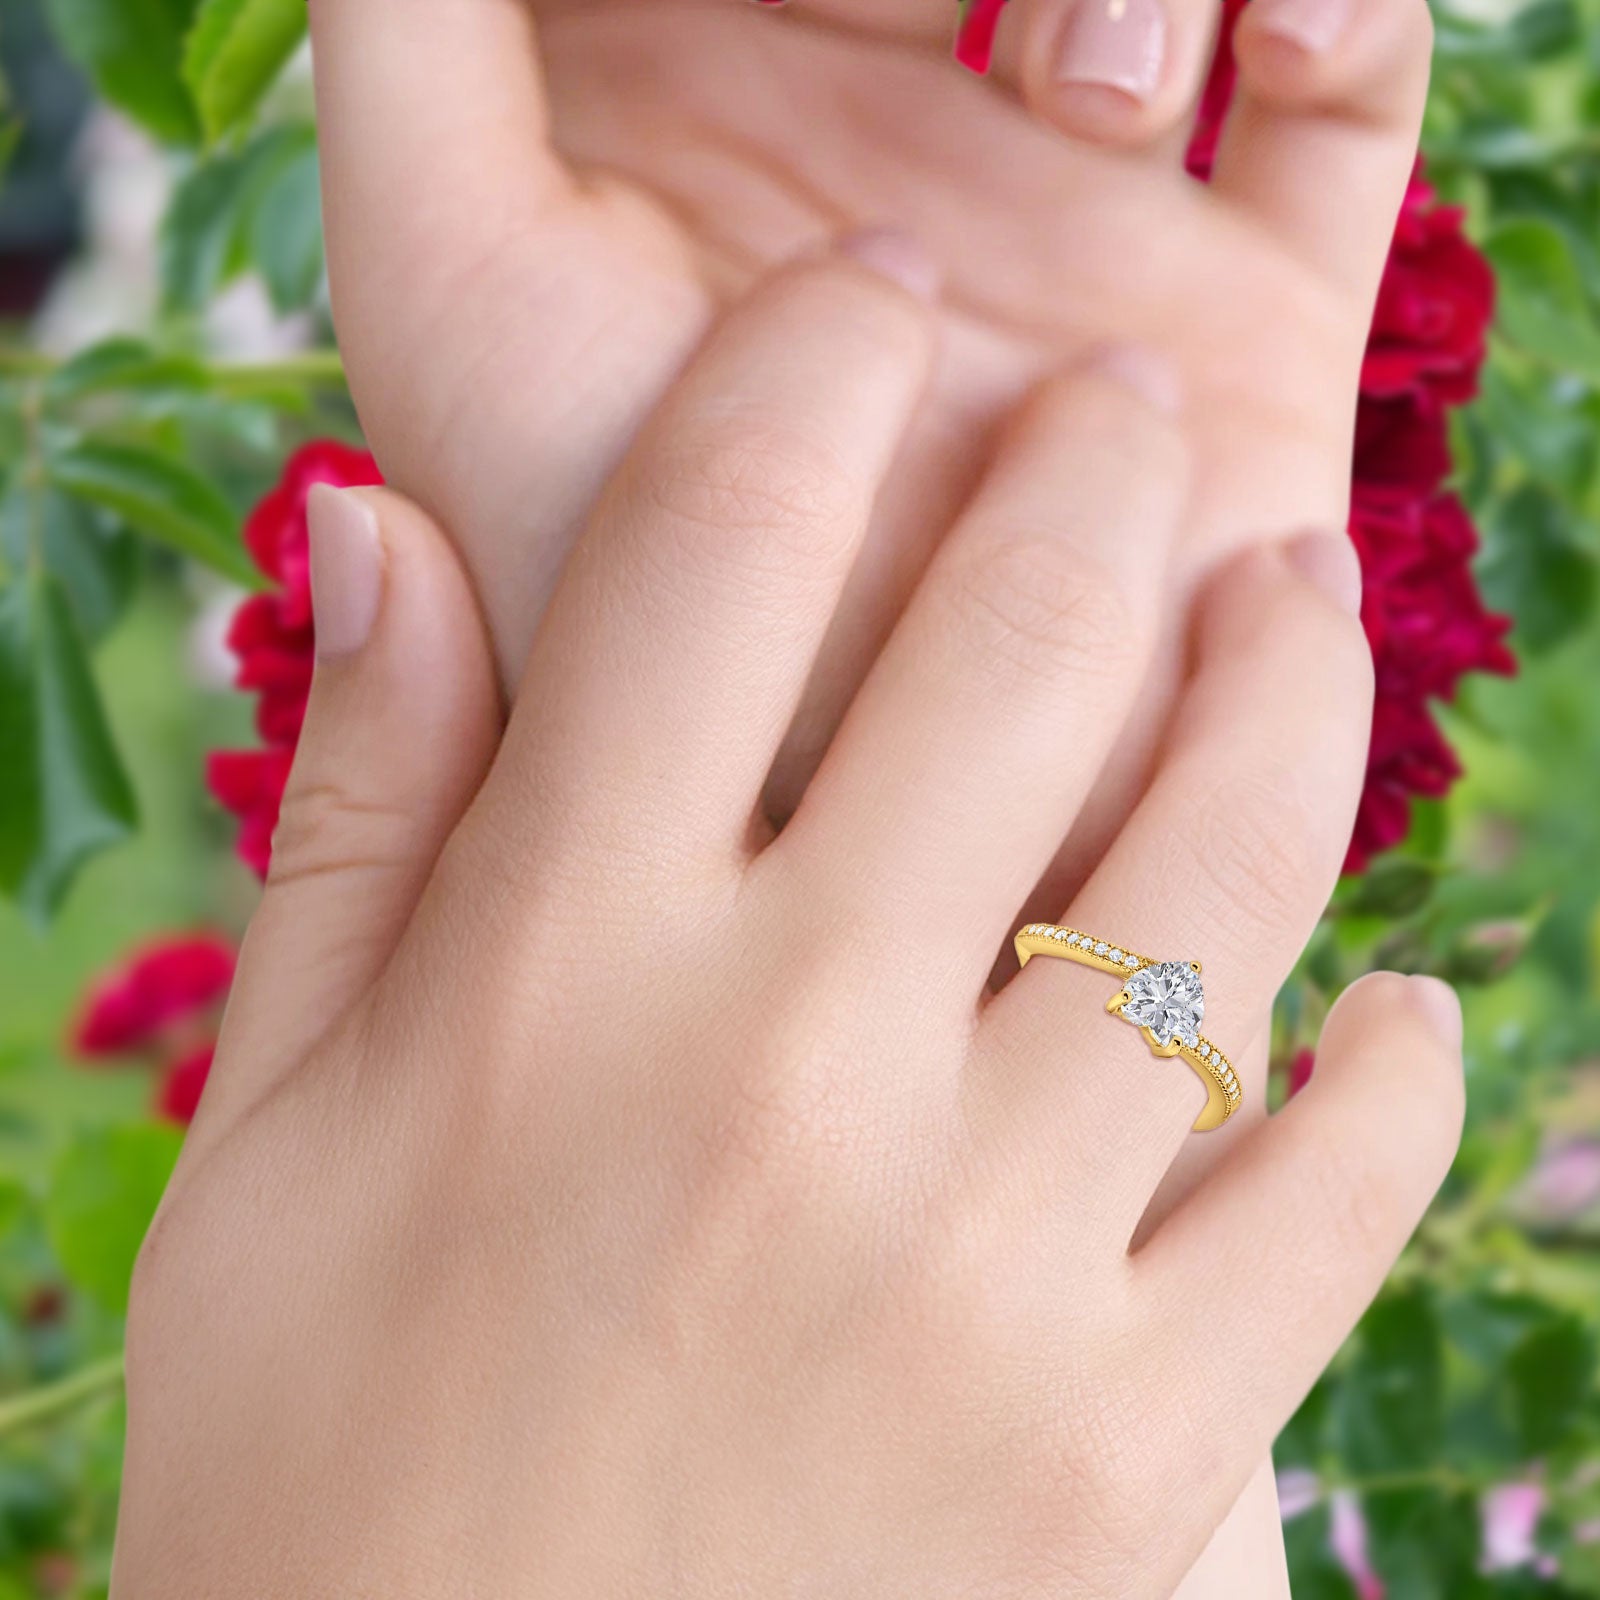 14K Gold Heart Shape Promise Wedding Engagement Ring Simulated Cubic Zirconia